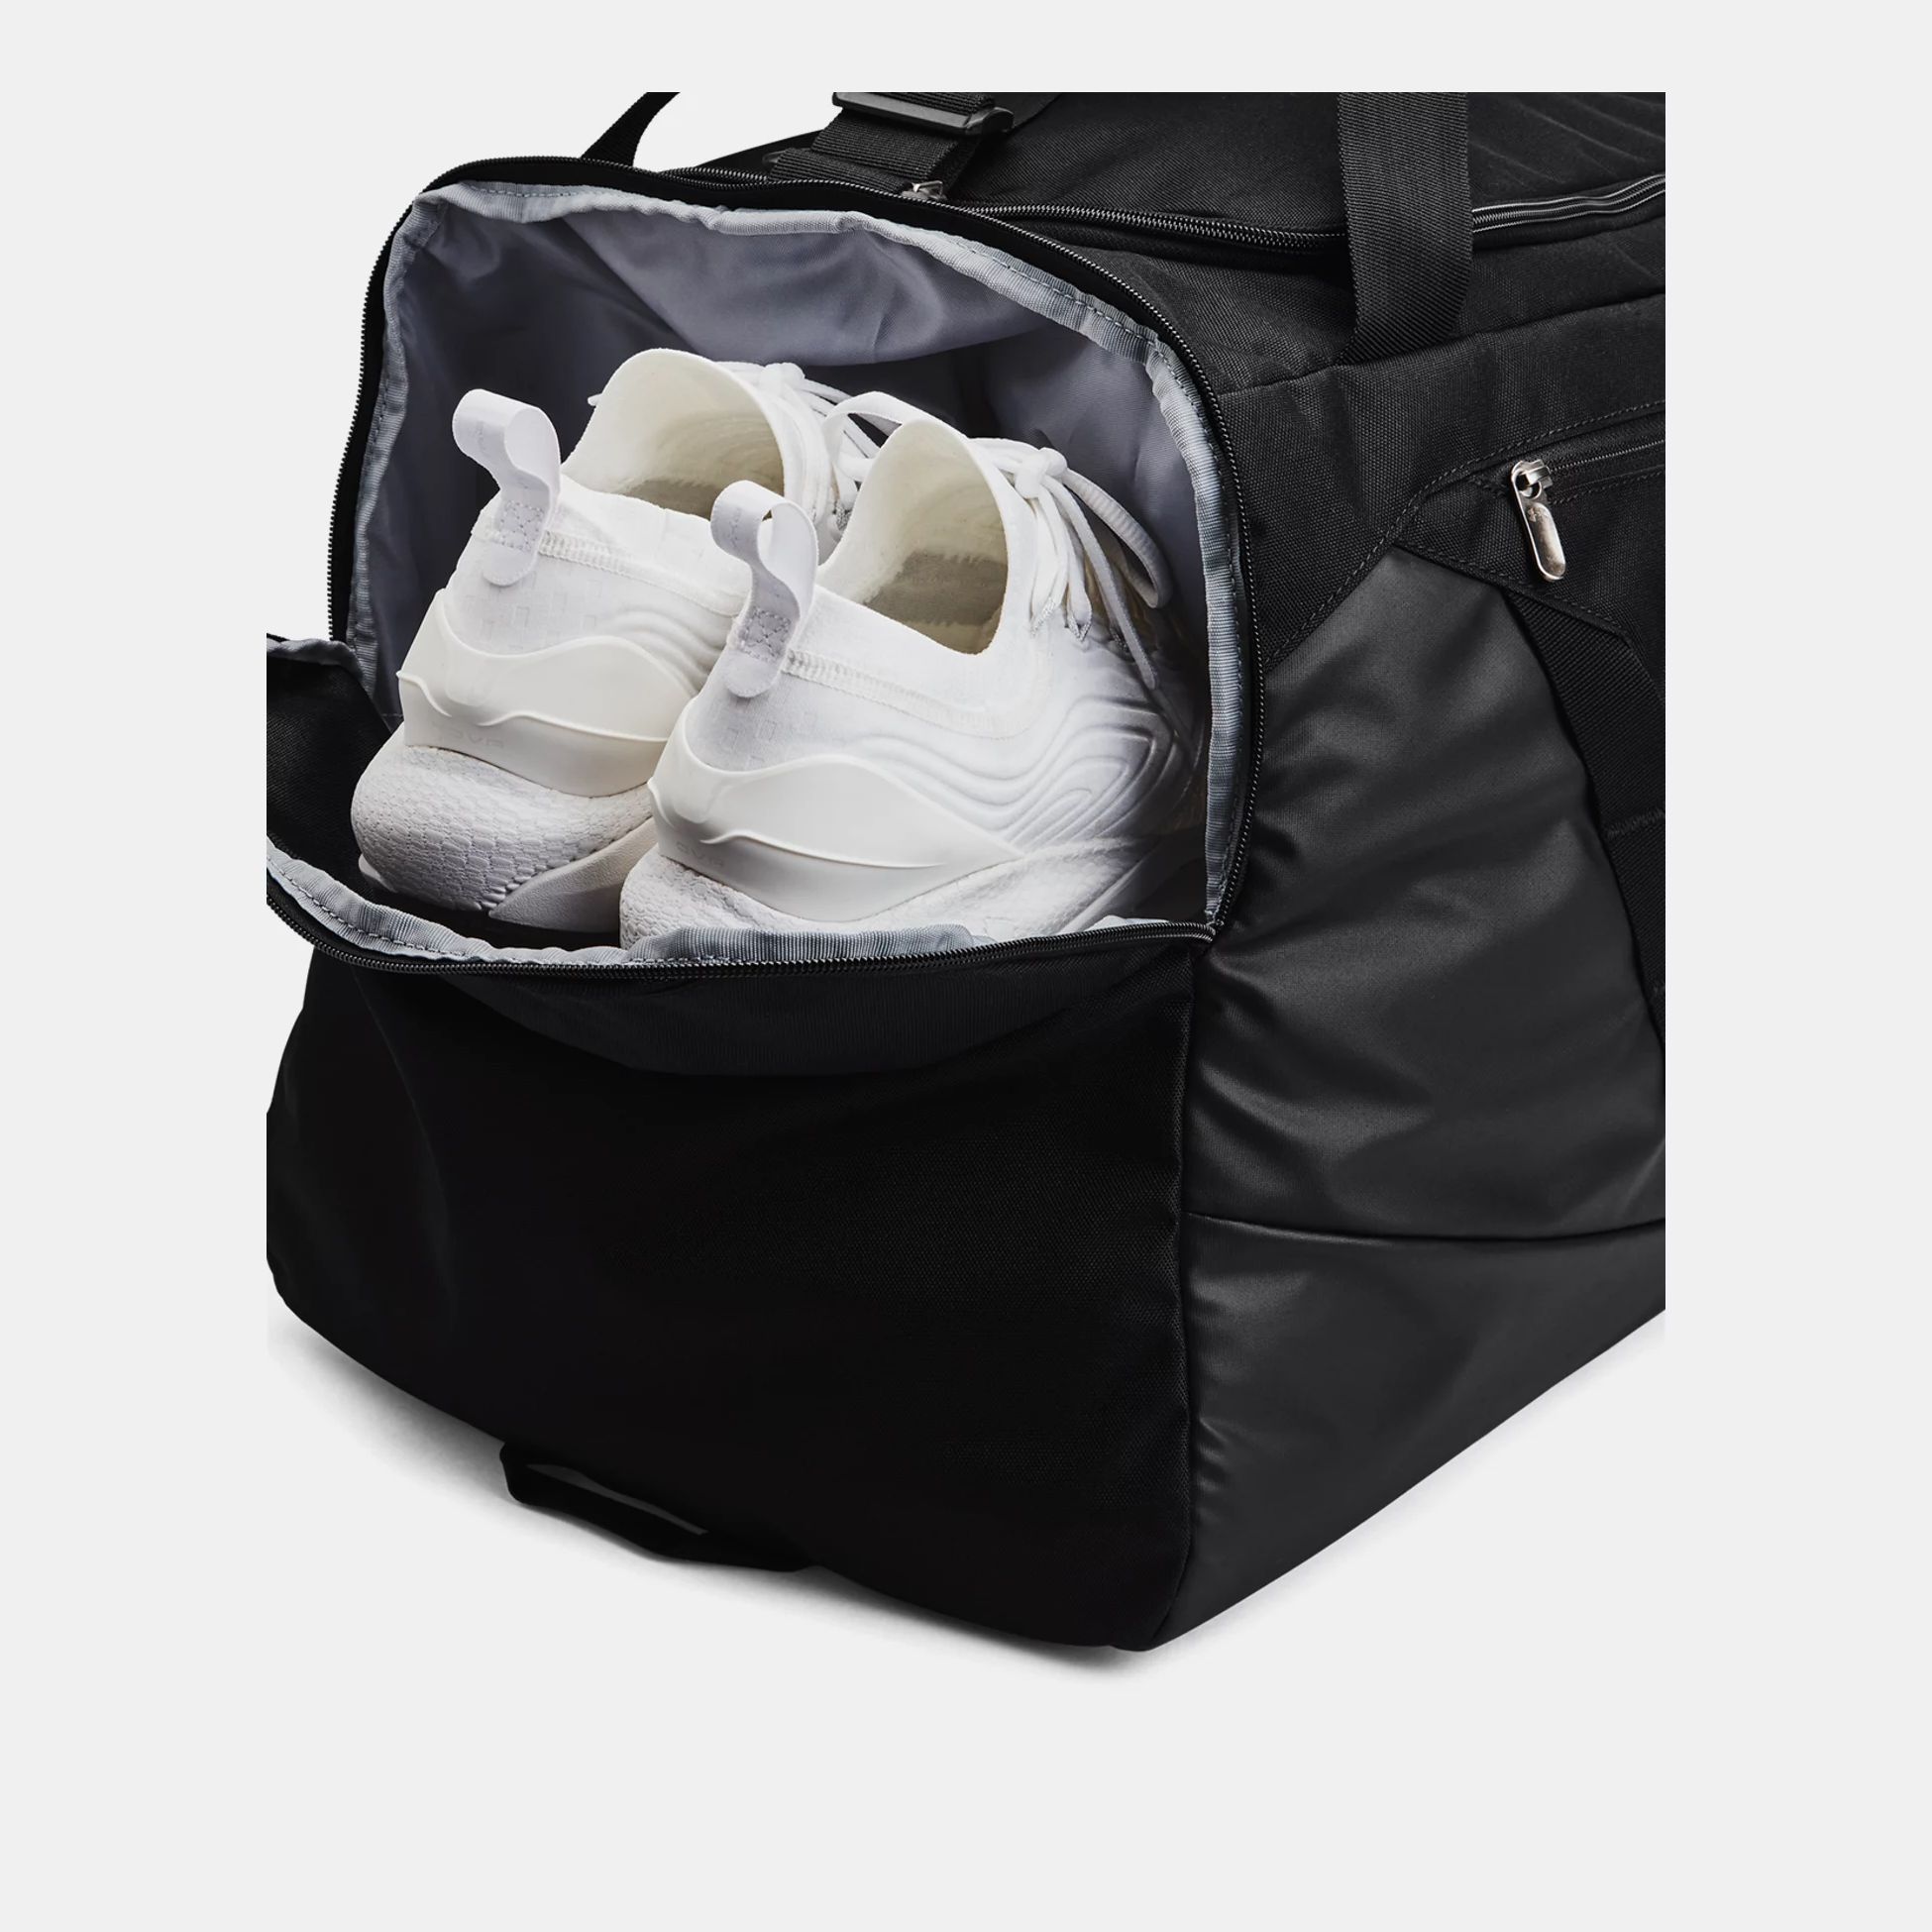 Bagpacks -  under armour UA Undeniable 5.0 Large Duffle Bag